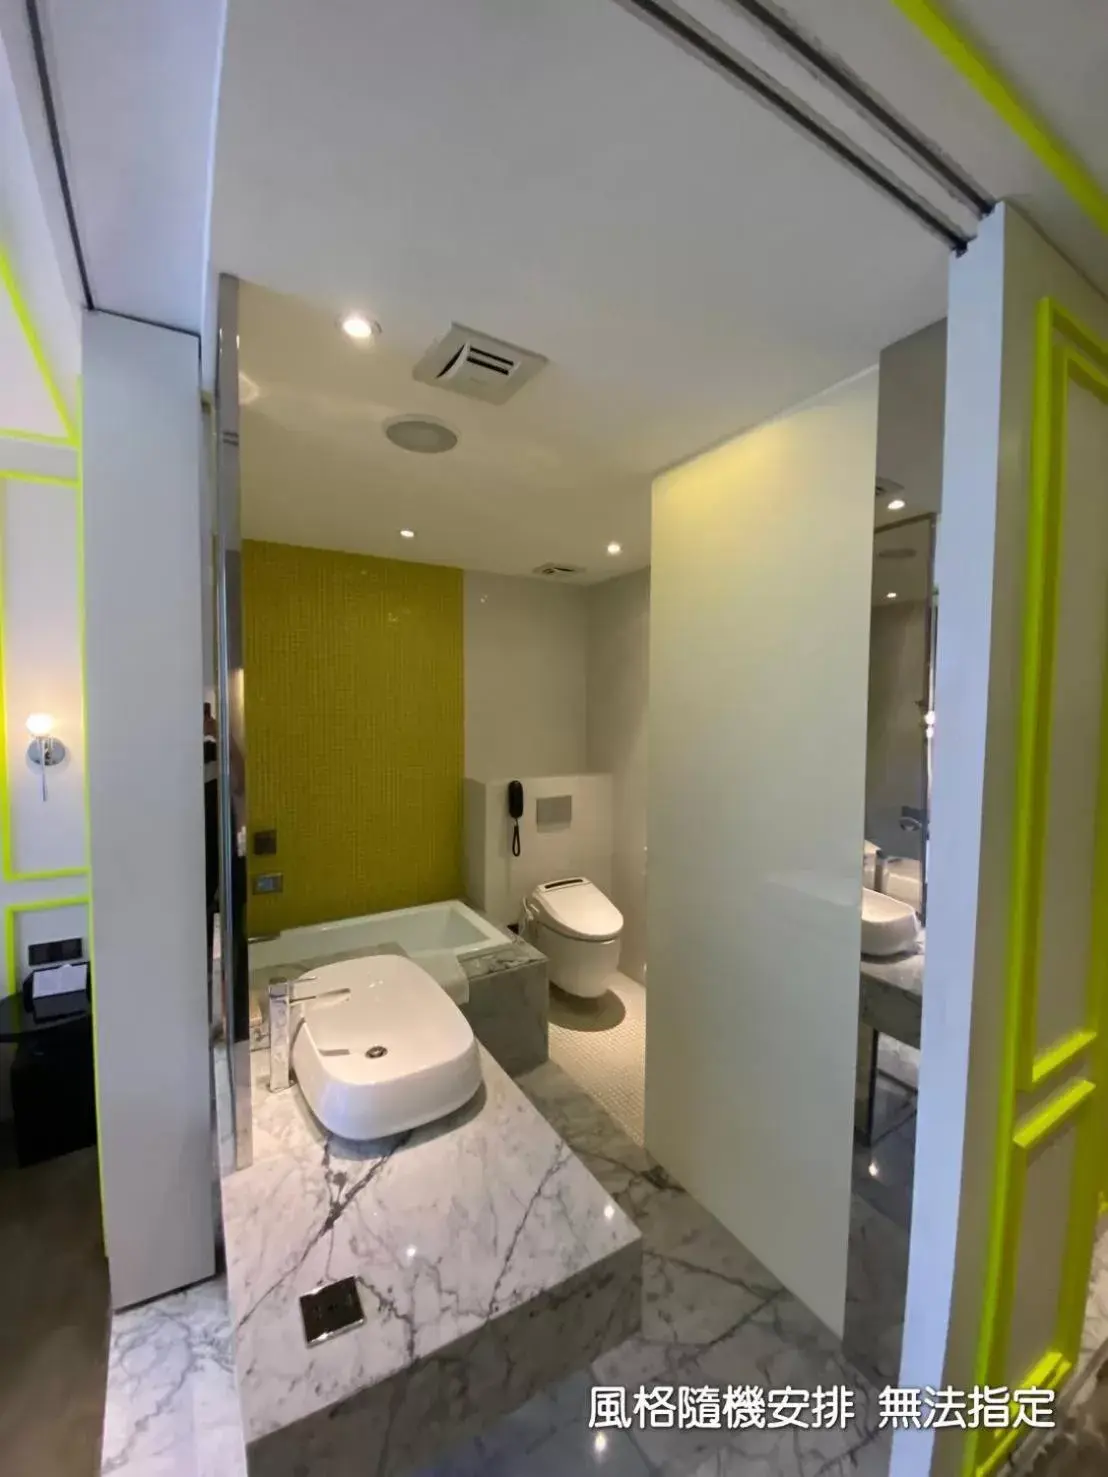 Bathroom in Boda Hotel